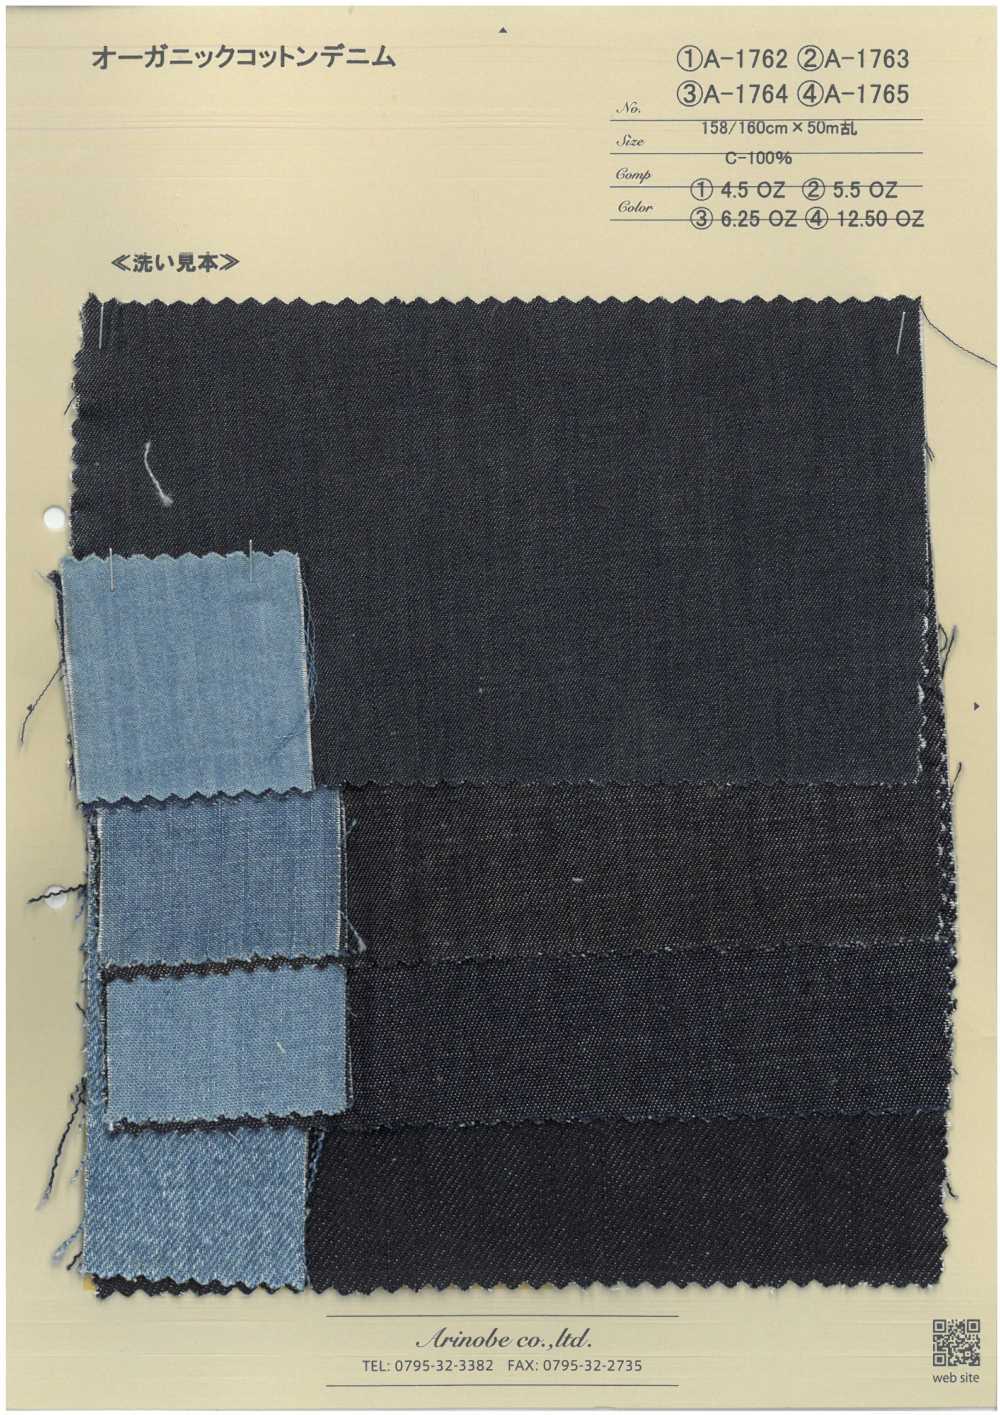 A-1764 Jean En Coton Biologique[Fabrication De Textile] ARINOBE CO., LTD.